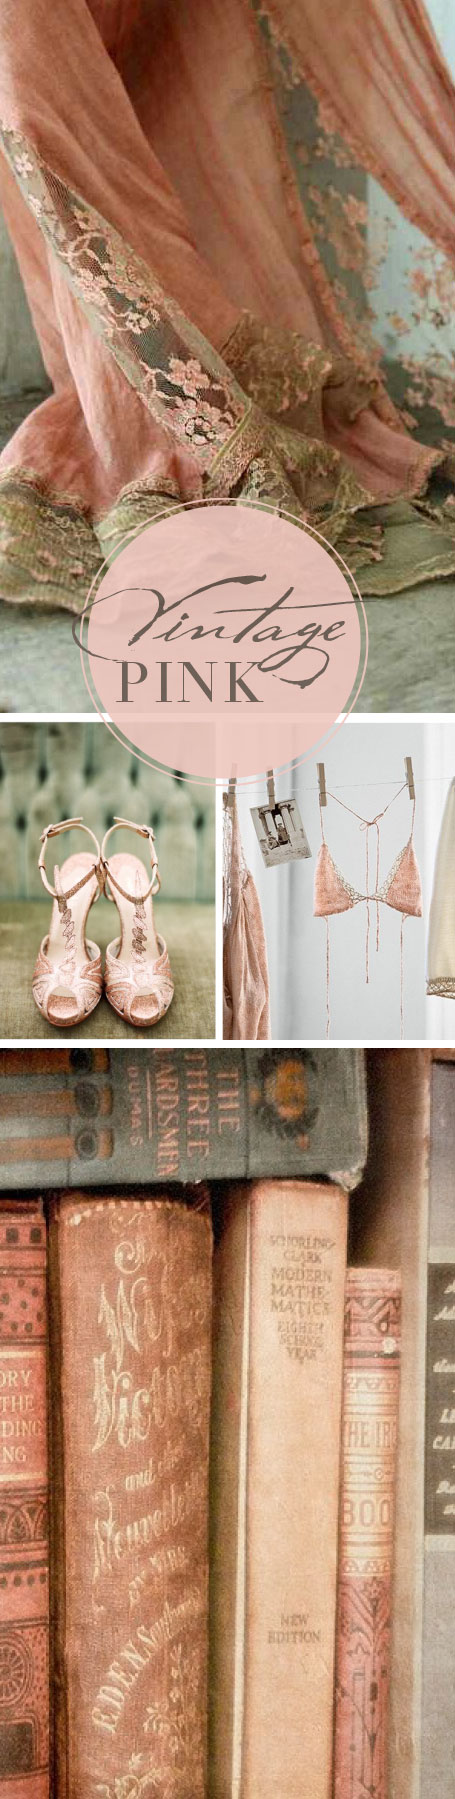 vintage-pink-inspired